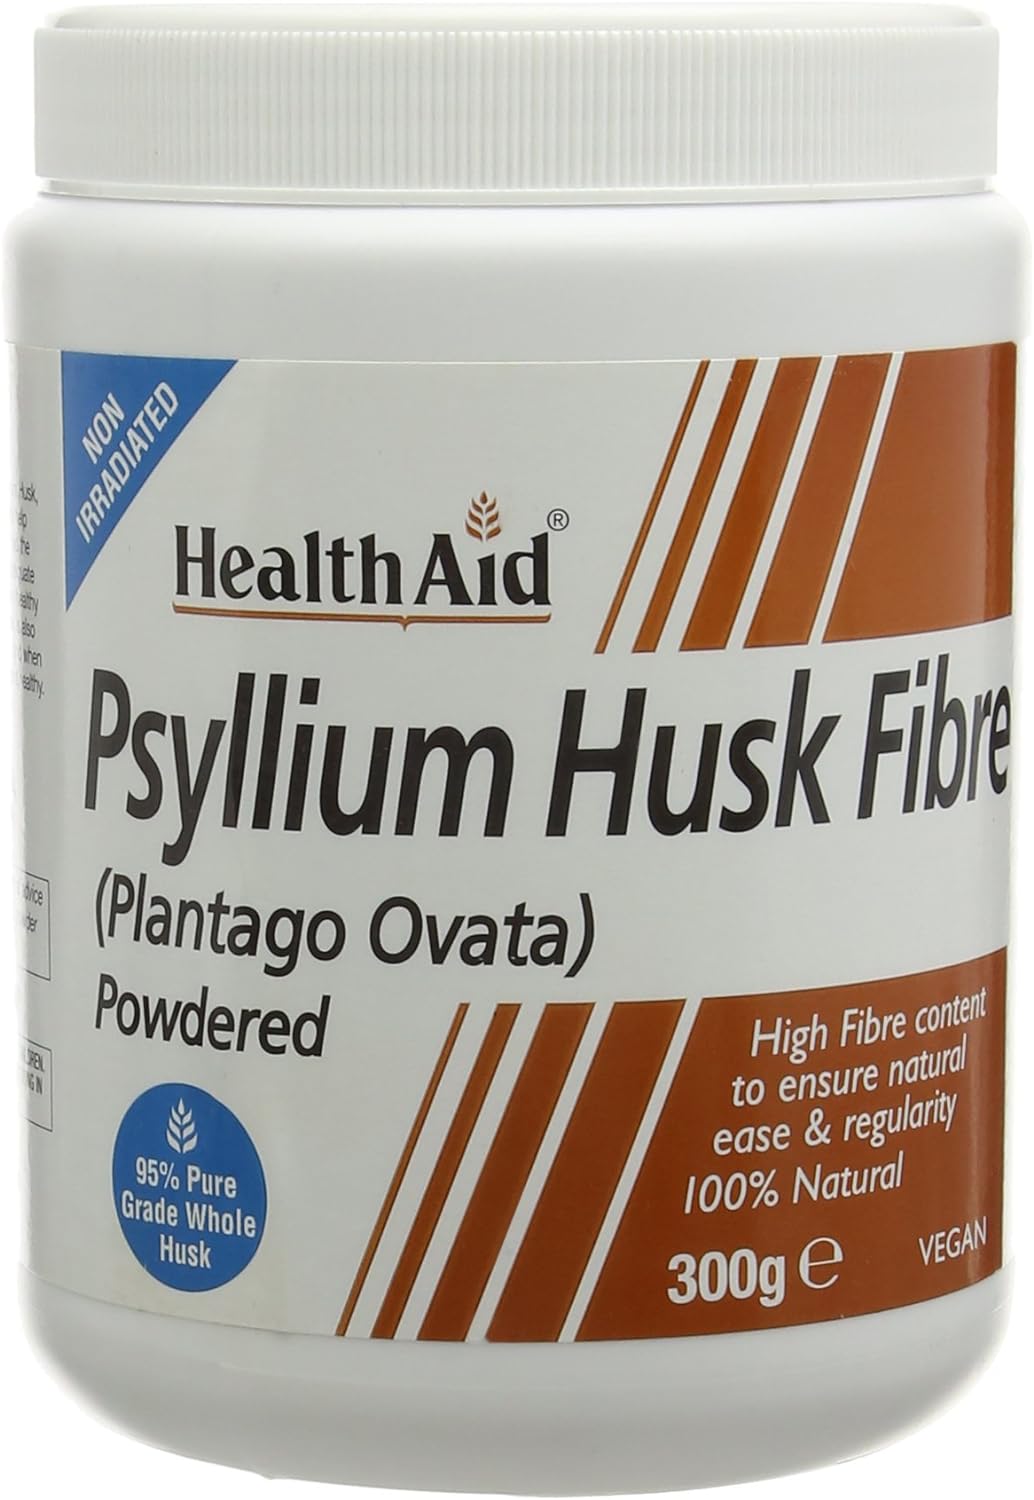 HealthAid Psyllium Husk Fibre Powder 300g

150 Grams